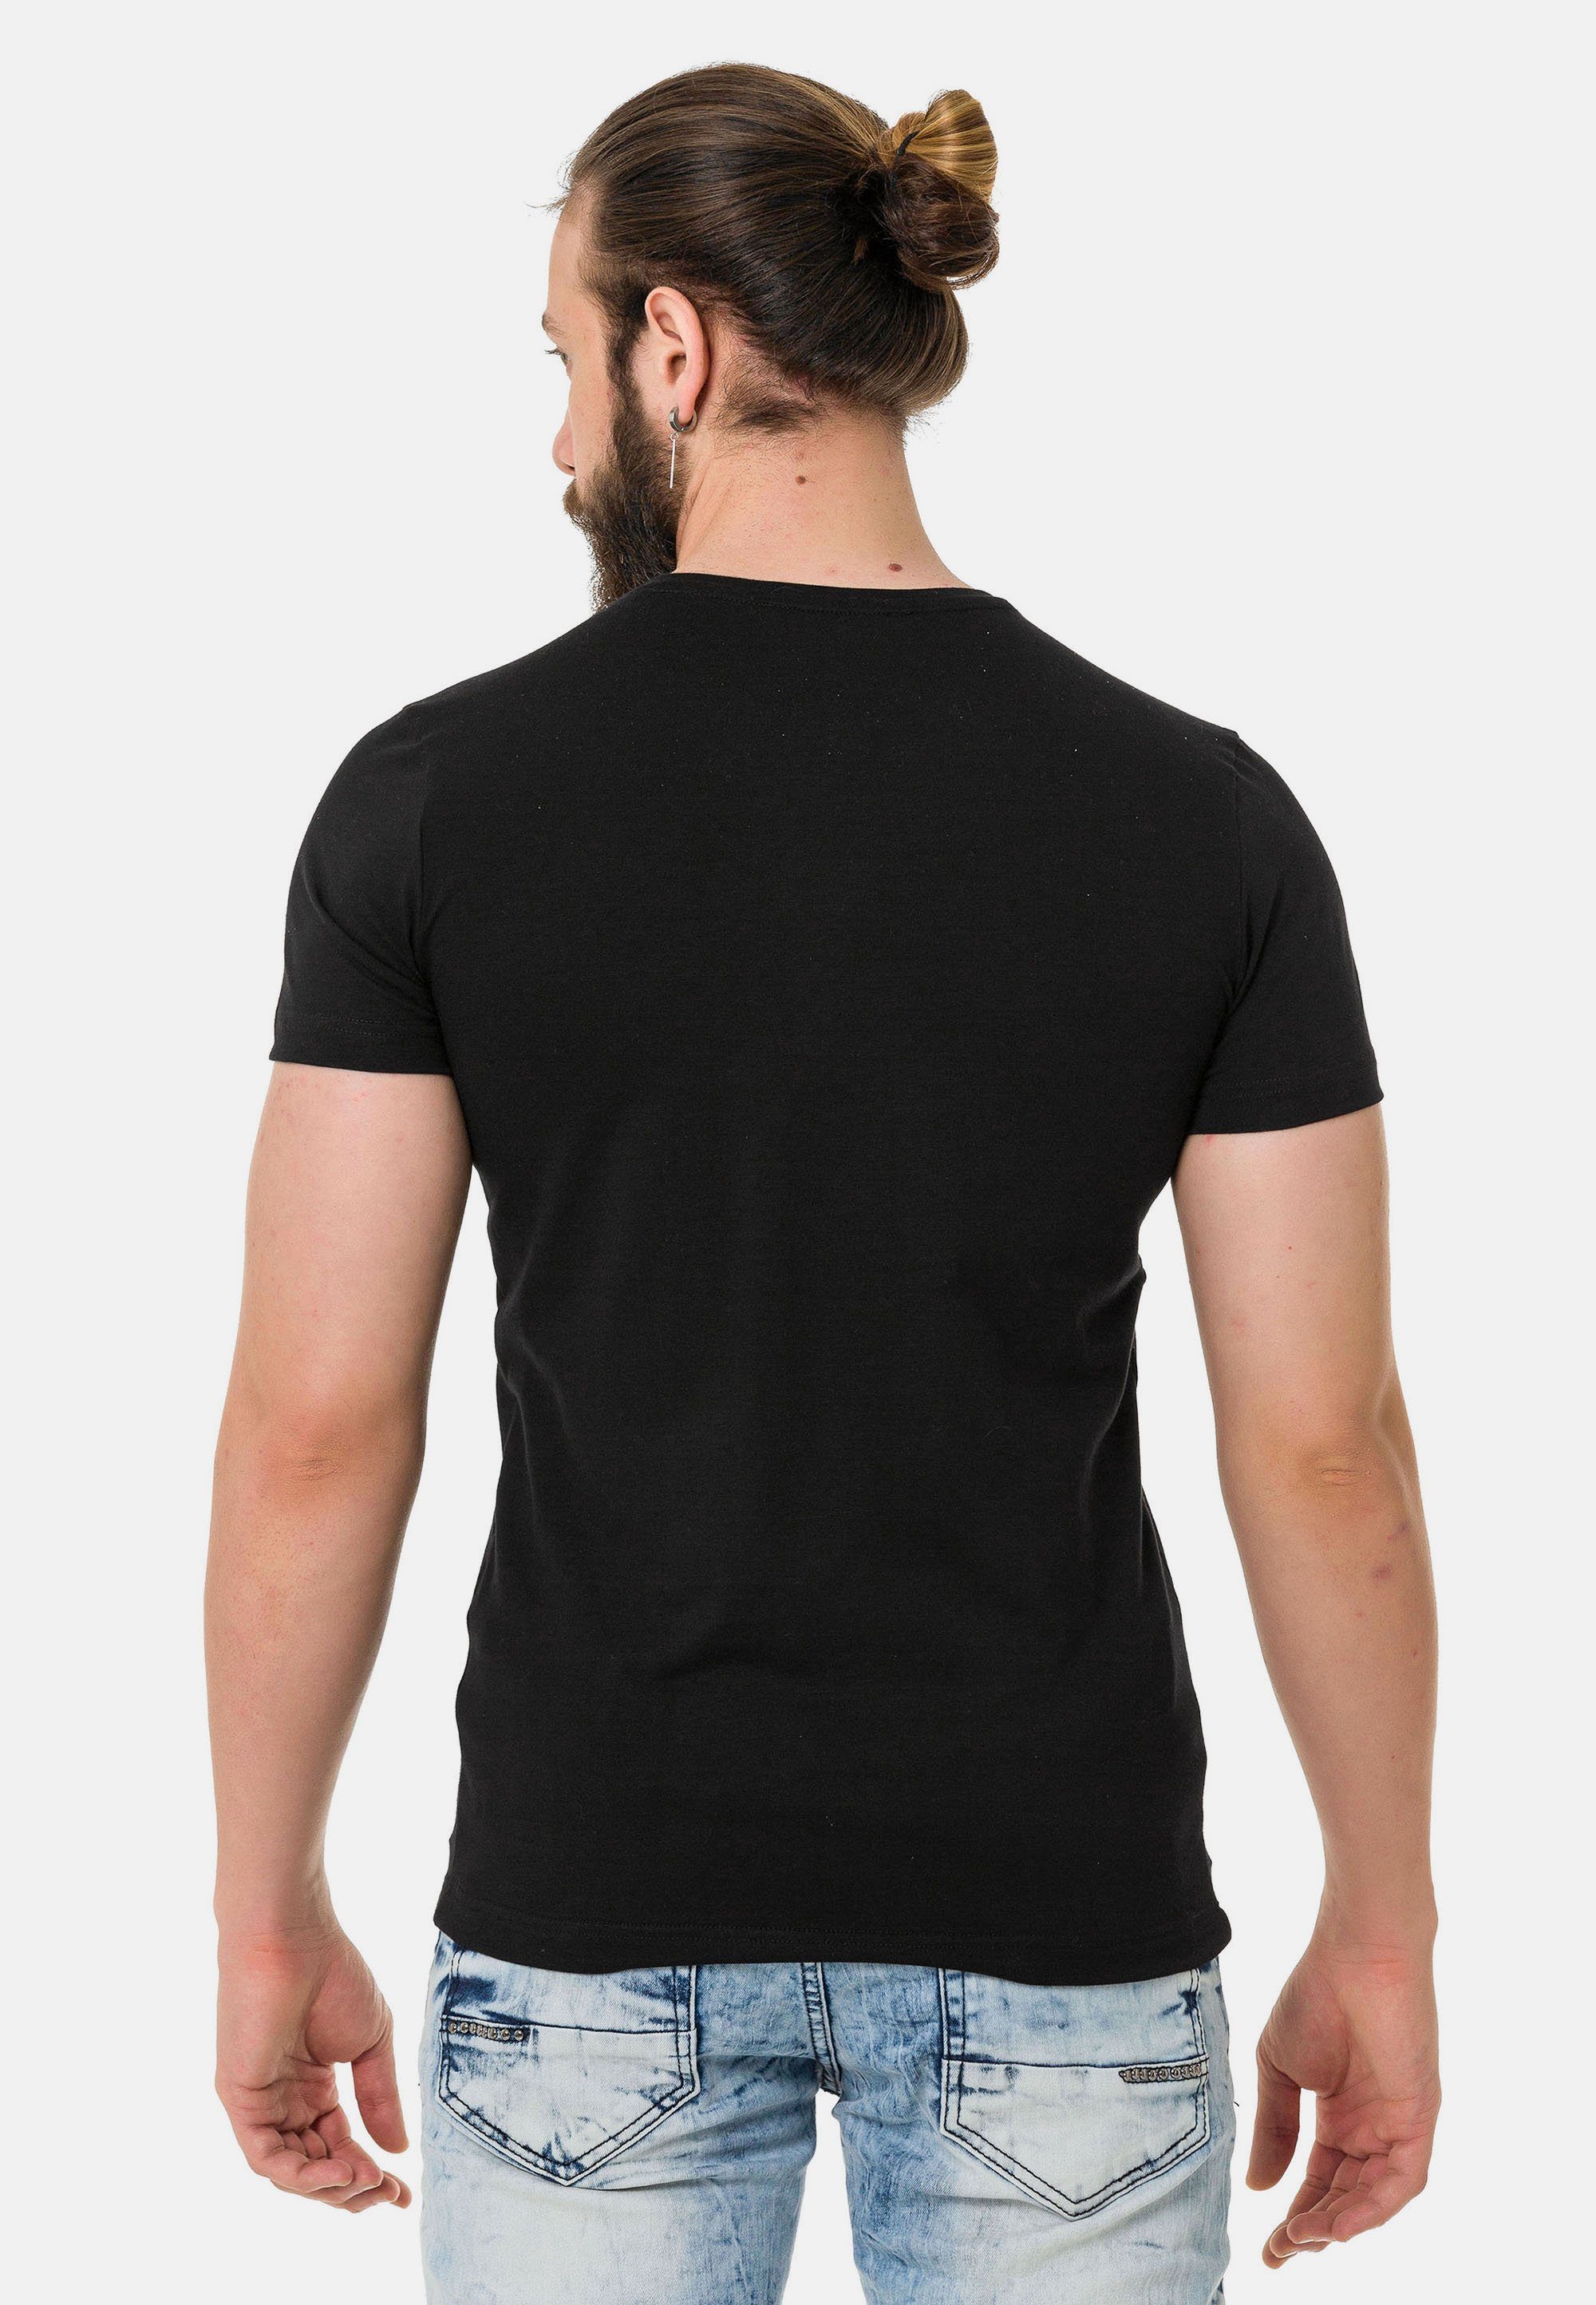 Cipo & Baxx schwarz T-Shirt trendigem Marken-Schriftzug mit